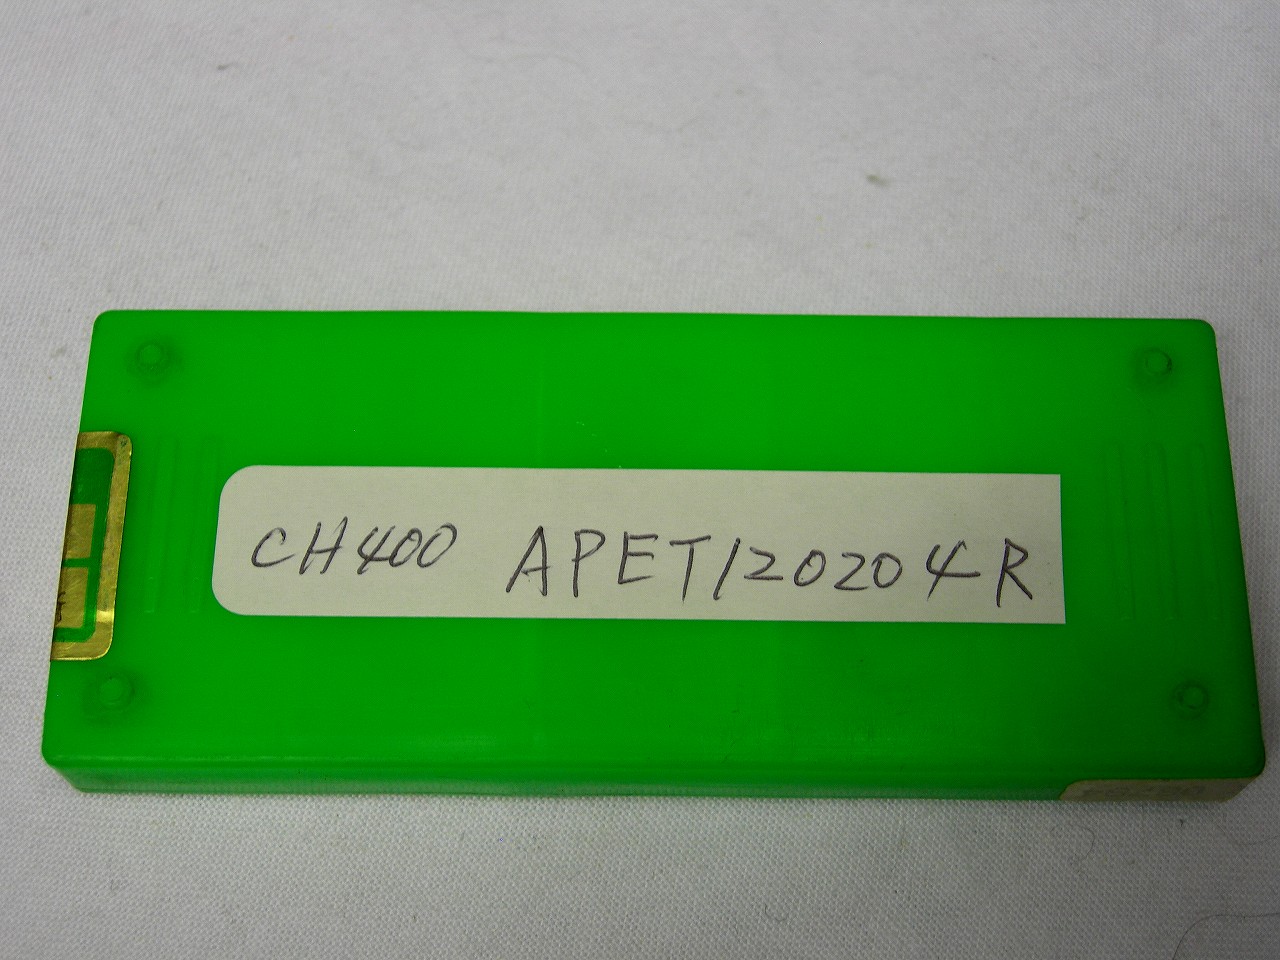 日立　APET120204-HR CH400